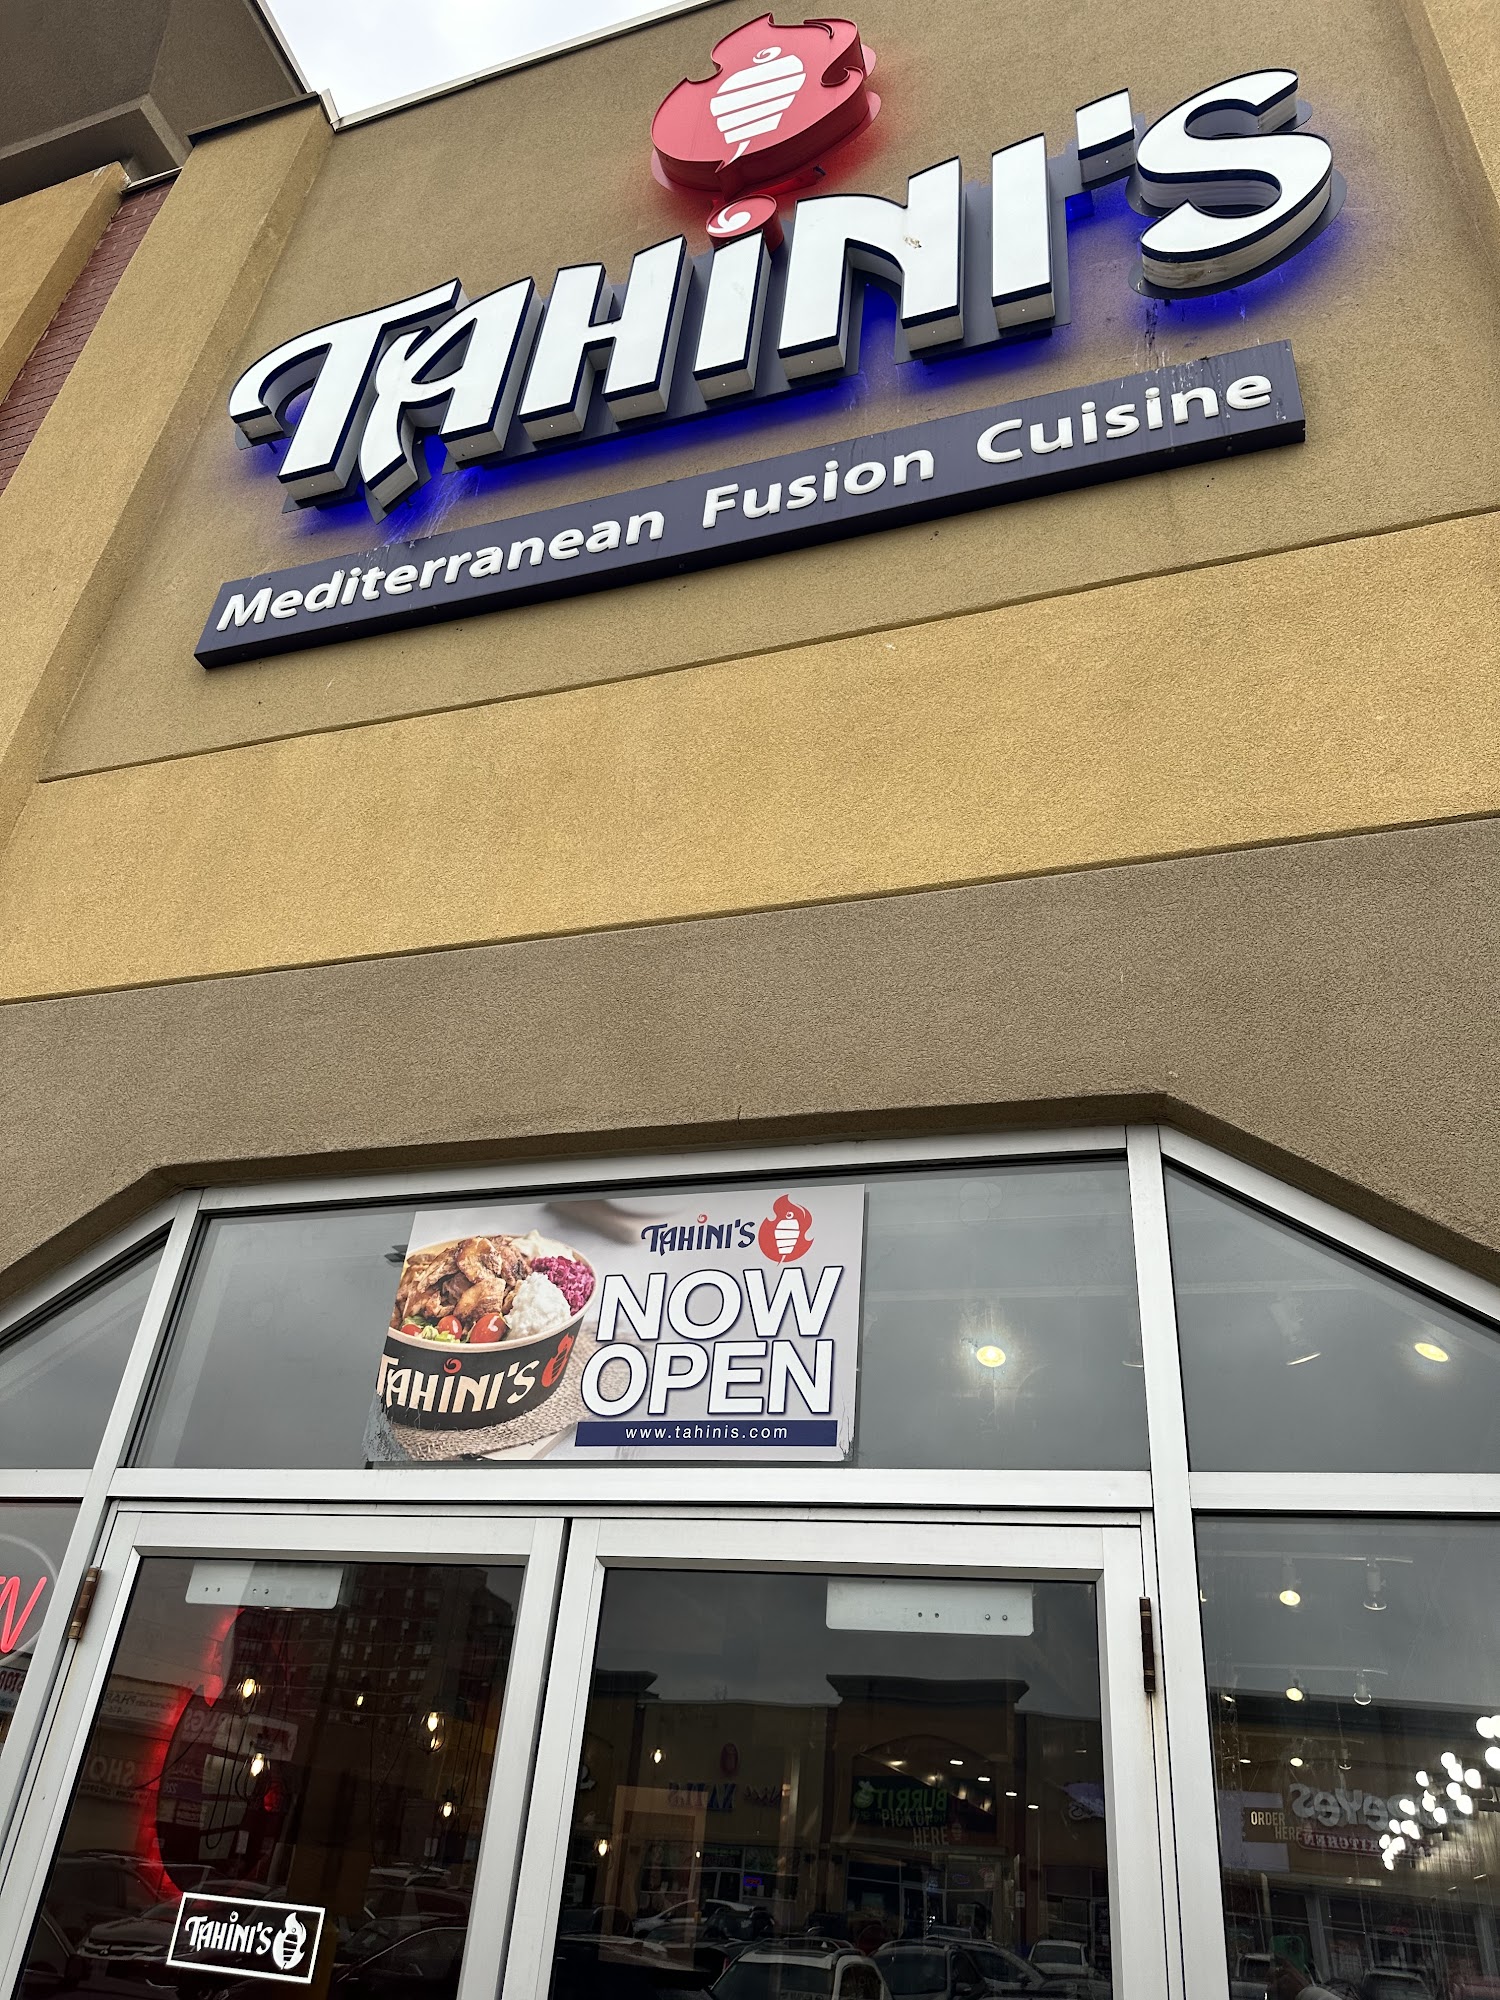 Tahini's